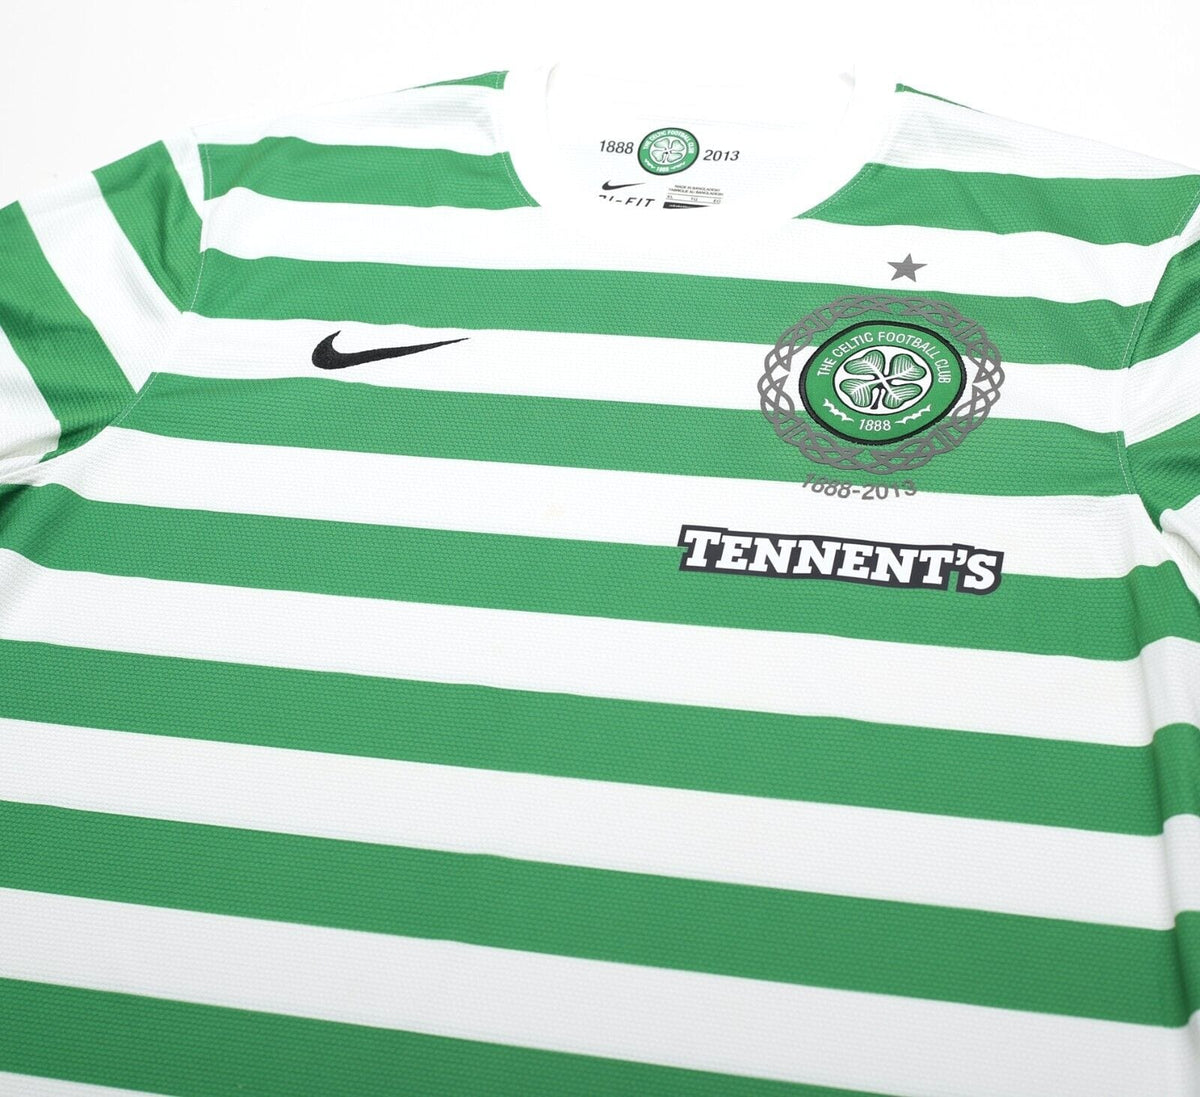 Vintage football shirts Tagged Celtic - Football Shirt Collective